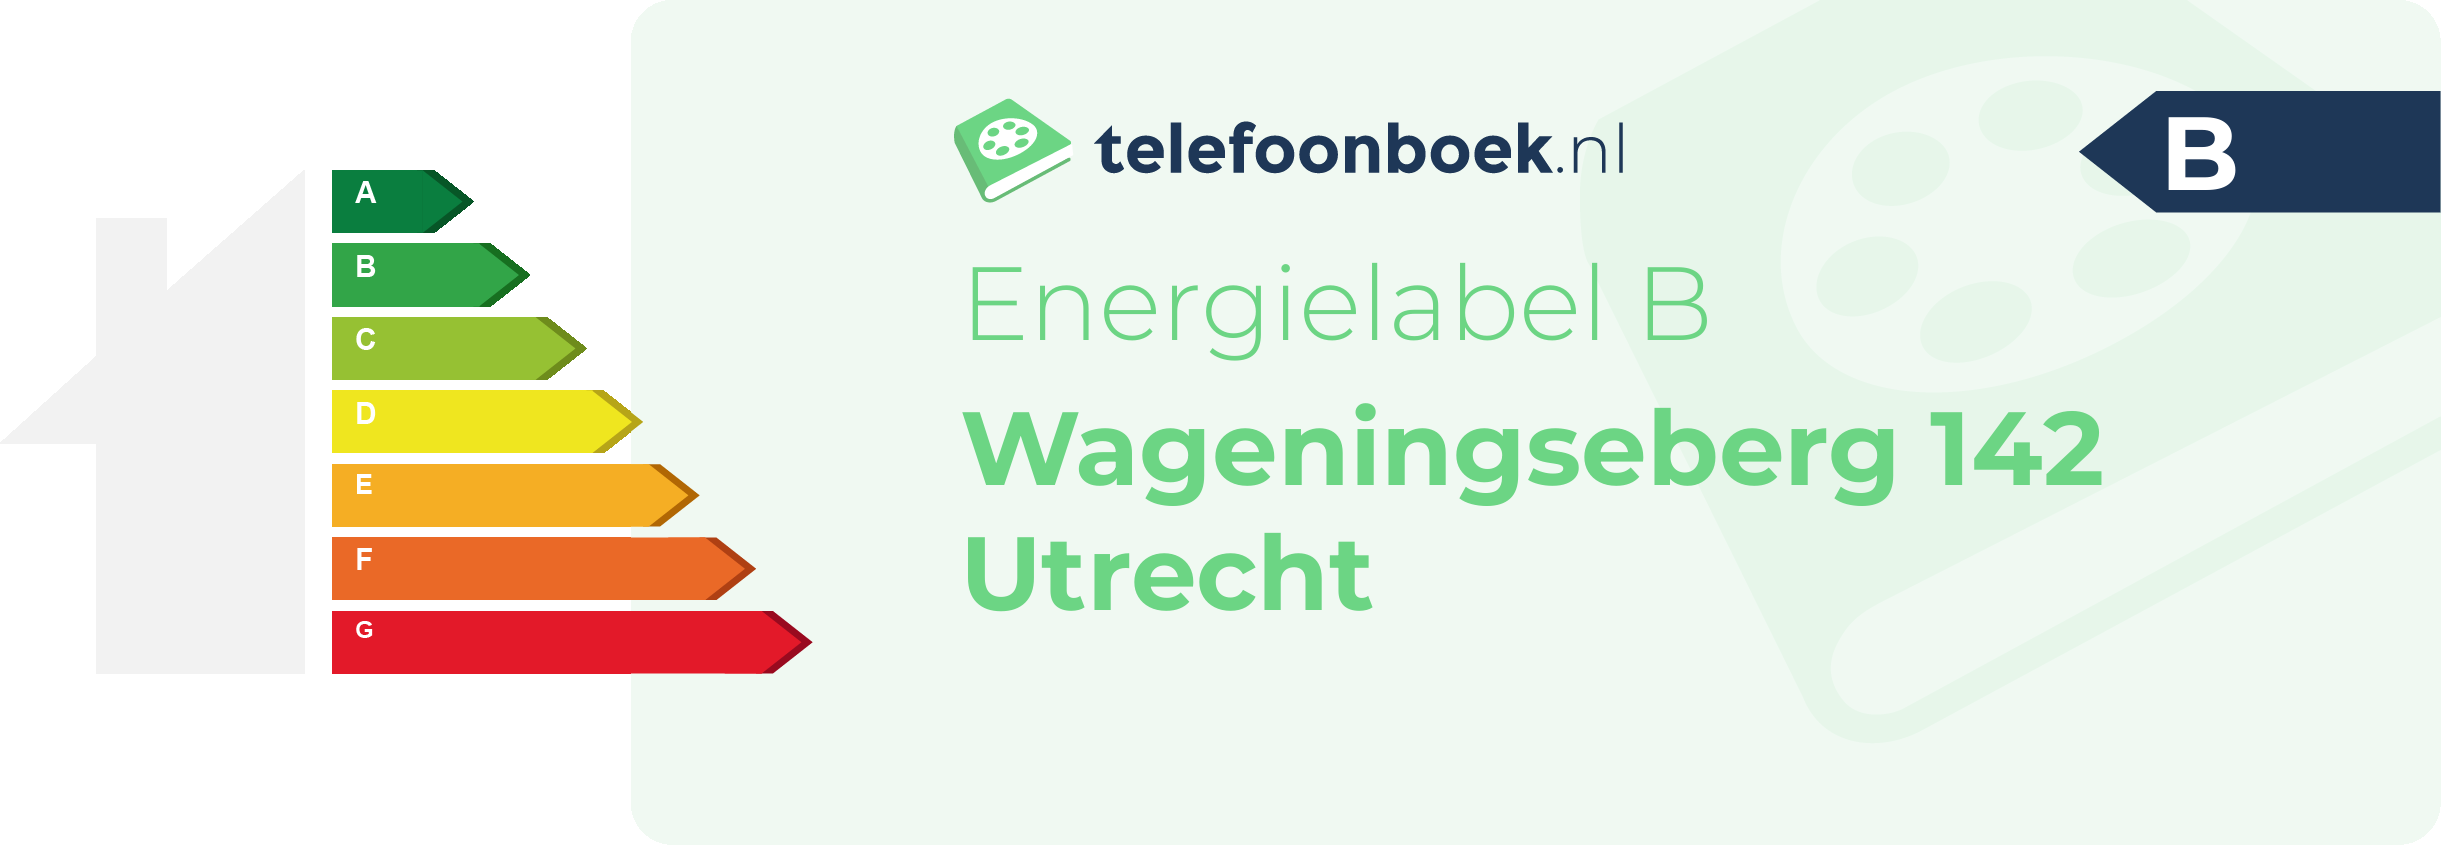 Energielabel Wageningseberg 142 Utrecht